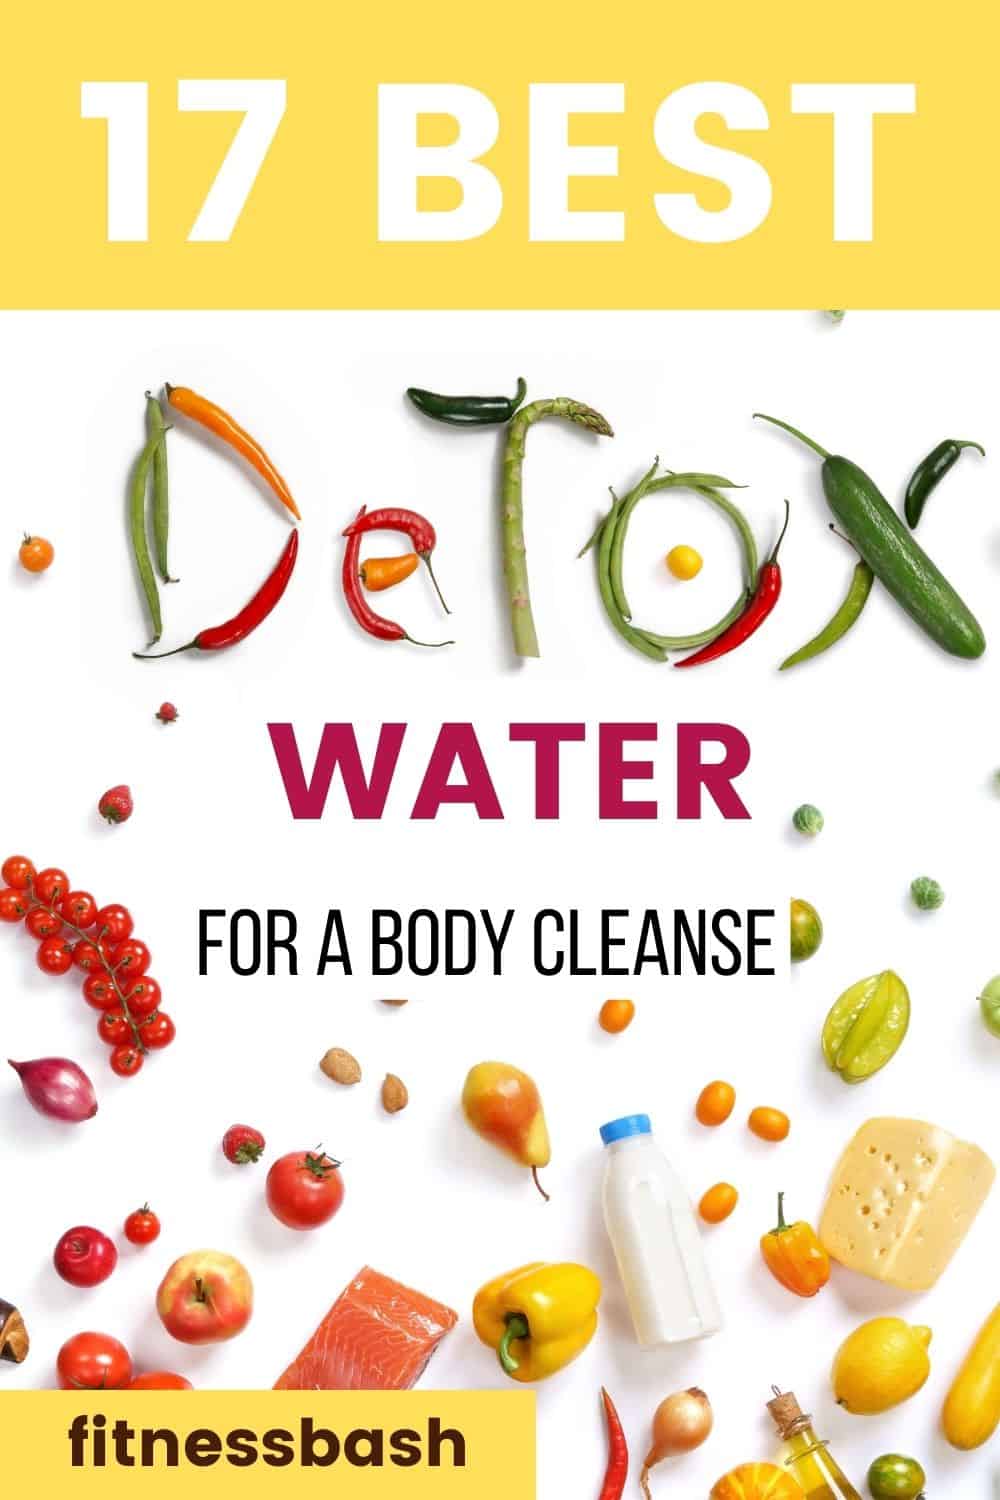 Detox water cleanse